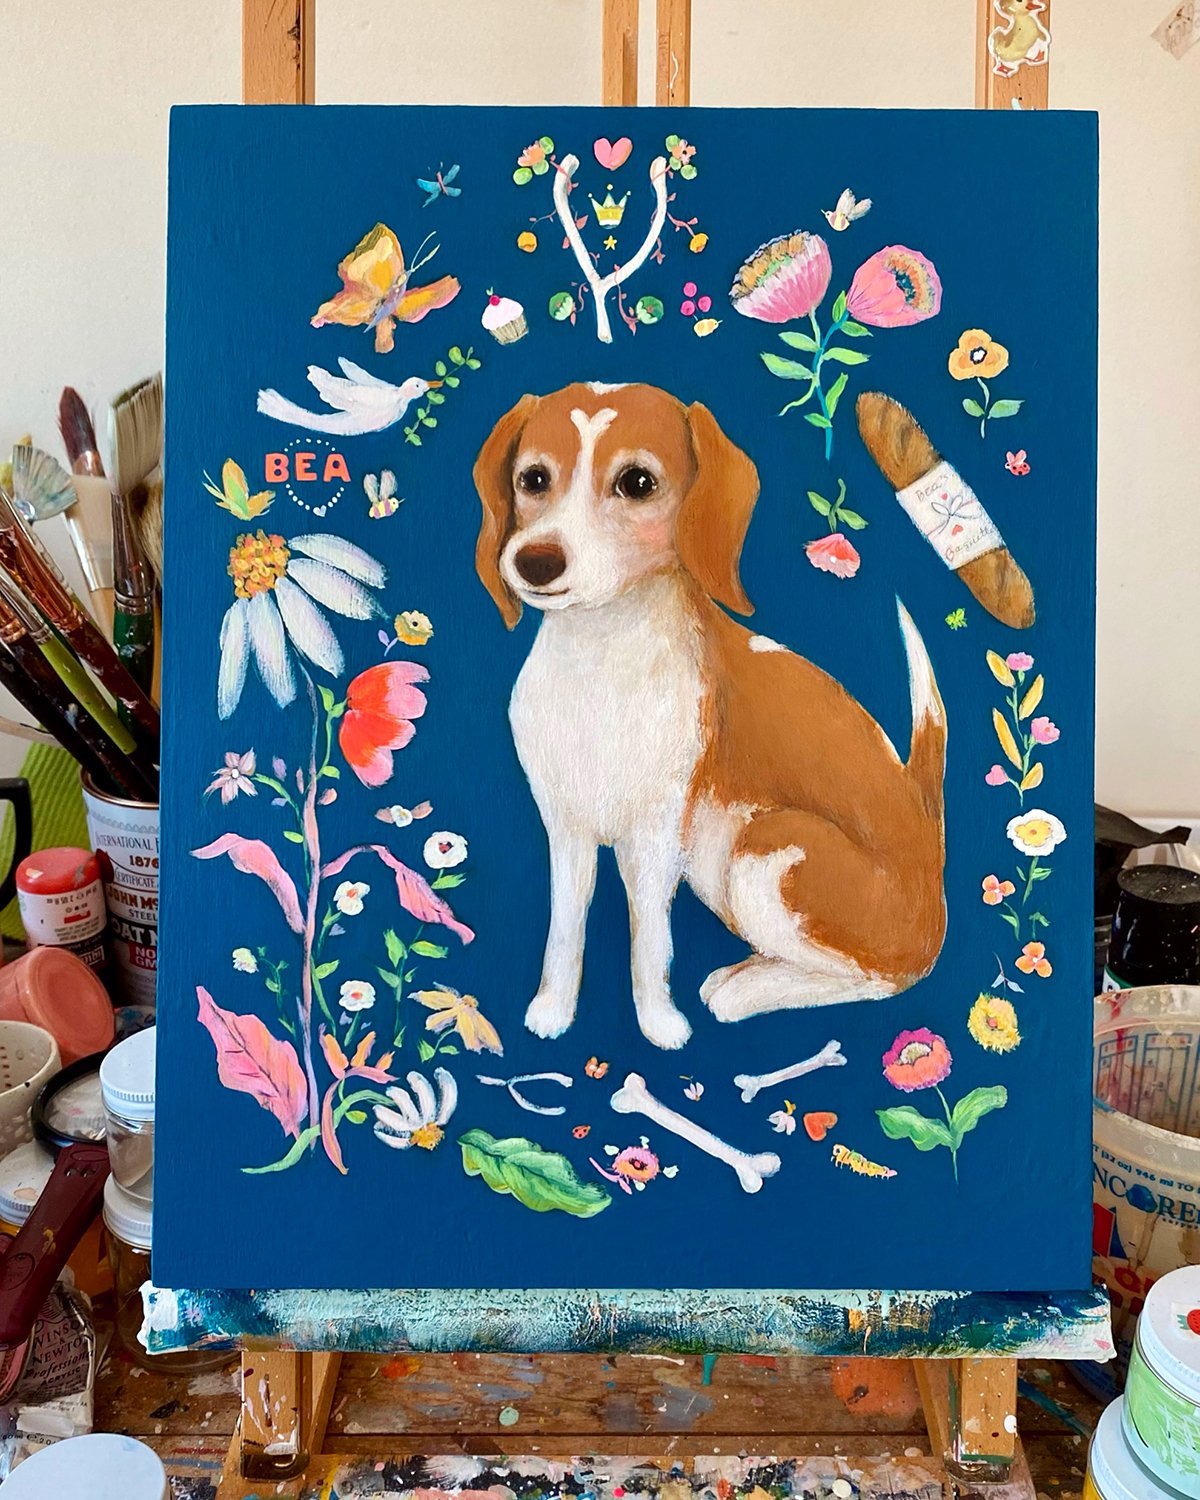 Allyn_Howard_studio_Bea-beagle.jpg